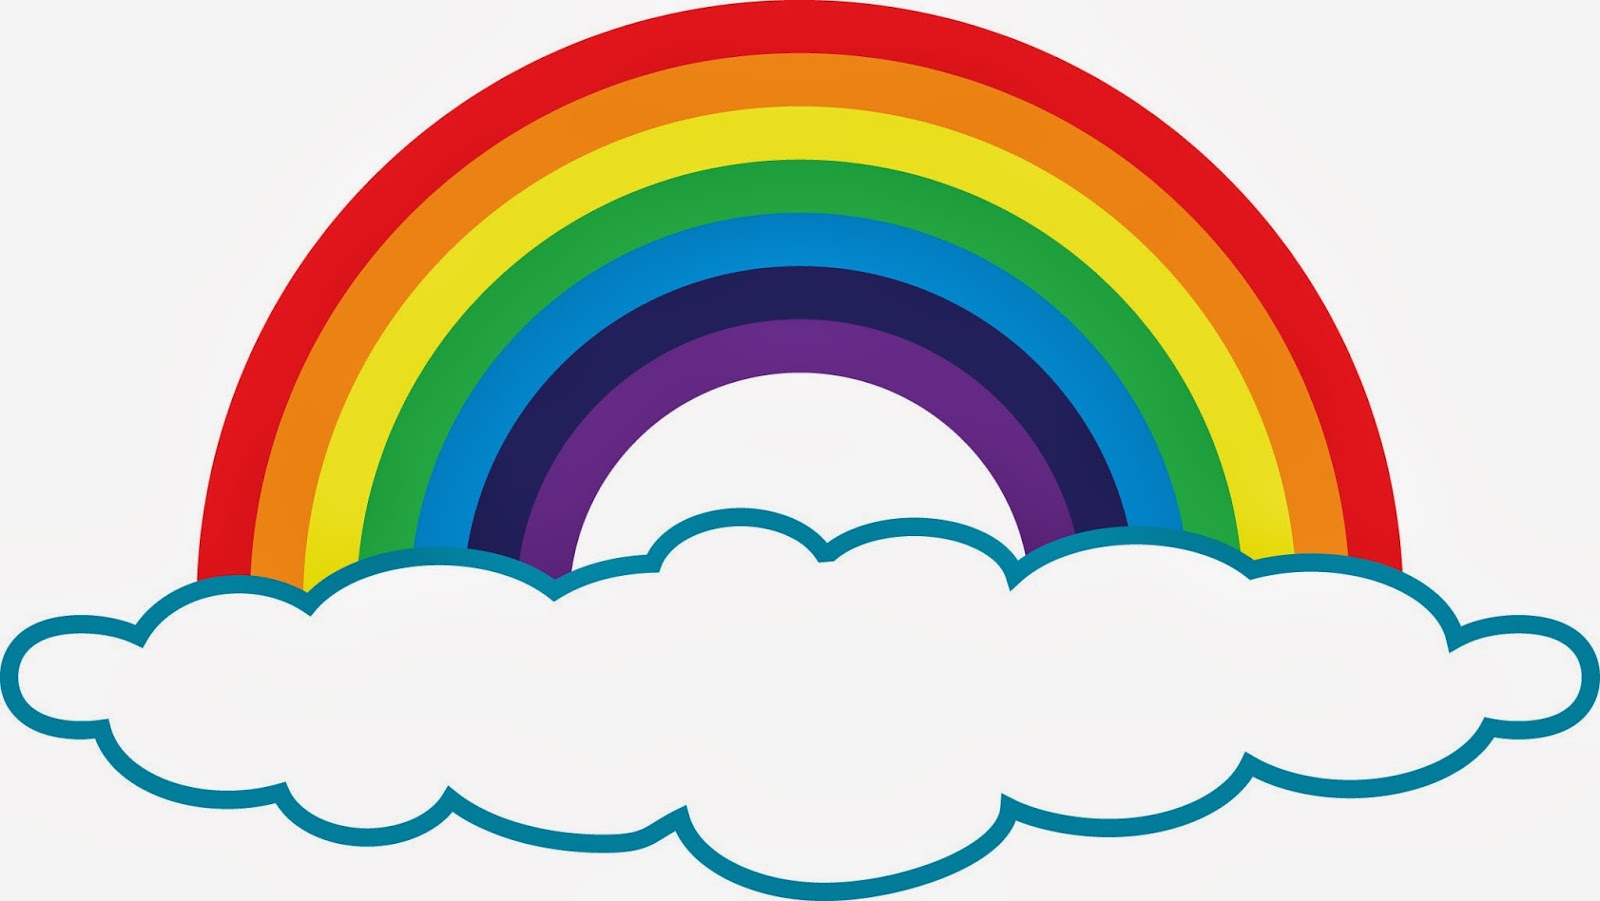 free vector rainbow clipart - photo #35